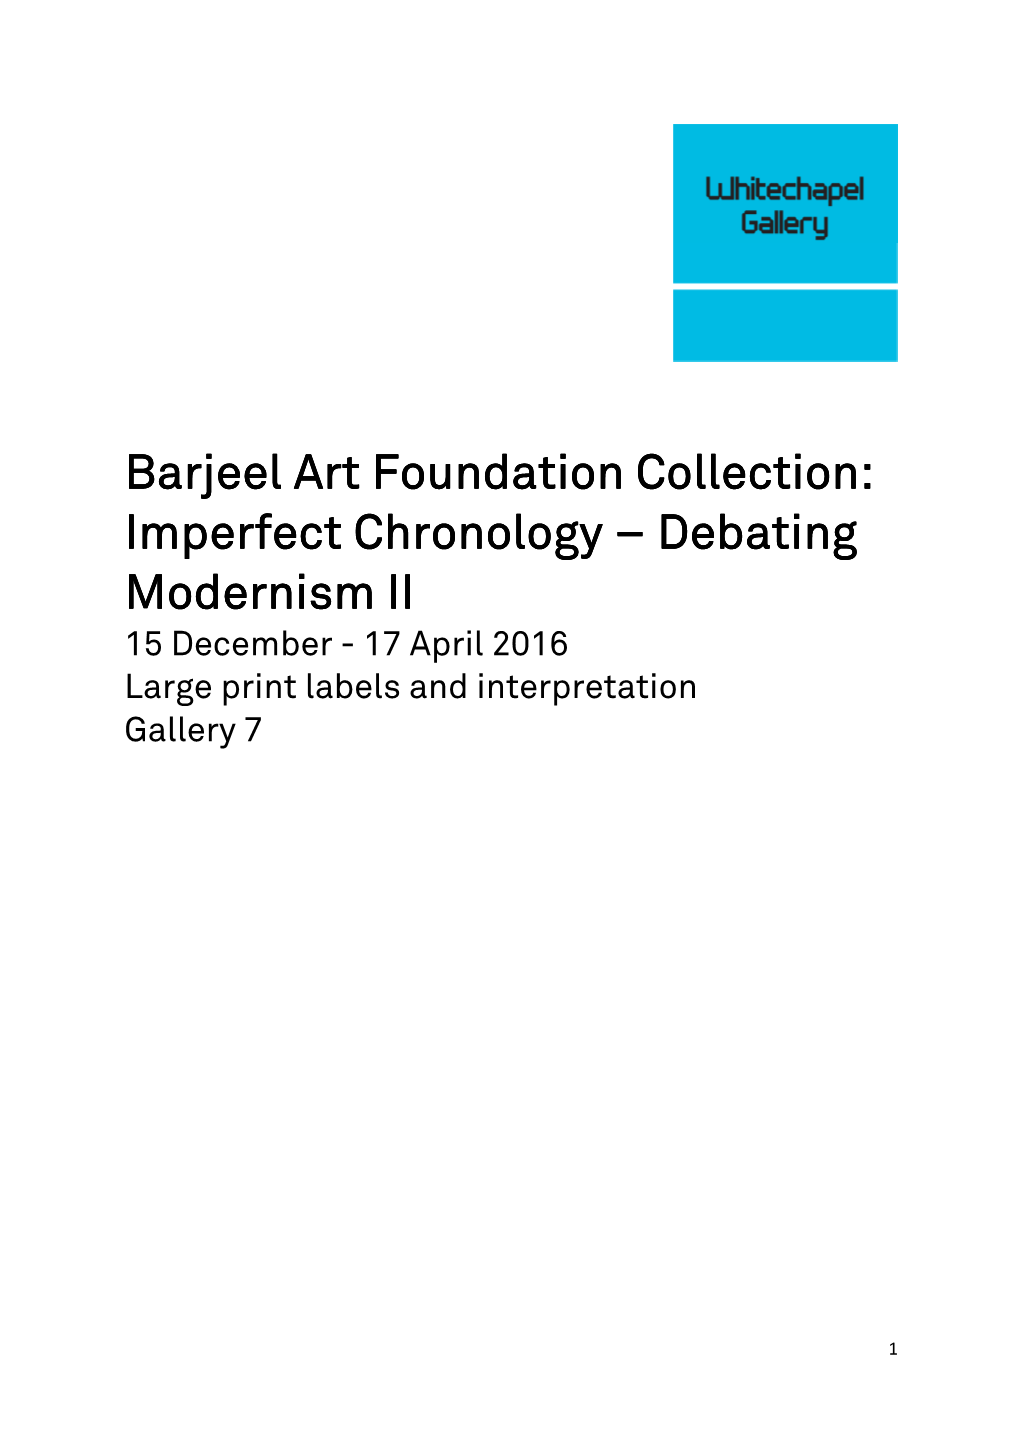 Barjeel Art Foundation Collection: Imperfect Chronology – Debating Modernism IIIIII 15 December - 17 April 2016 Large Print Labels and Interpretation Gallery 7